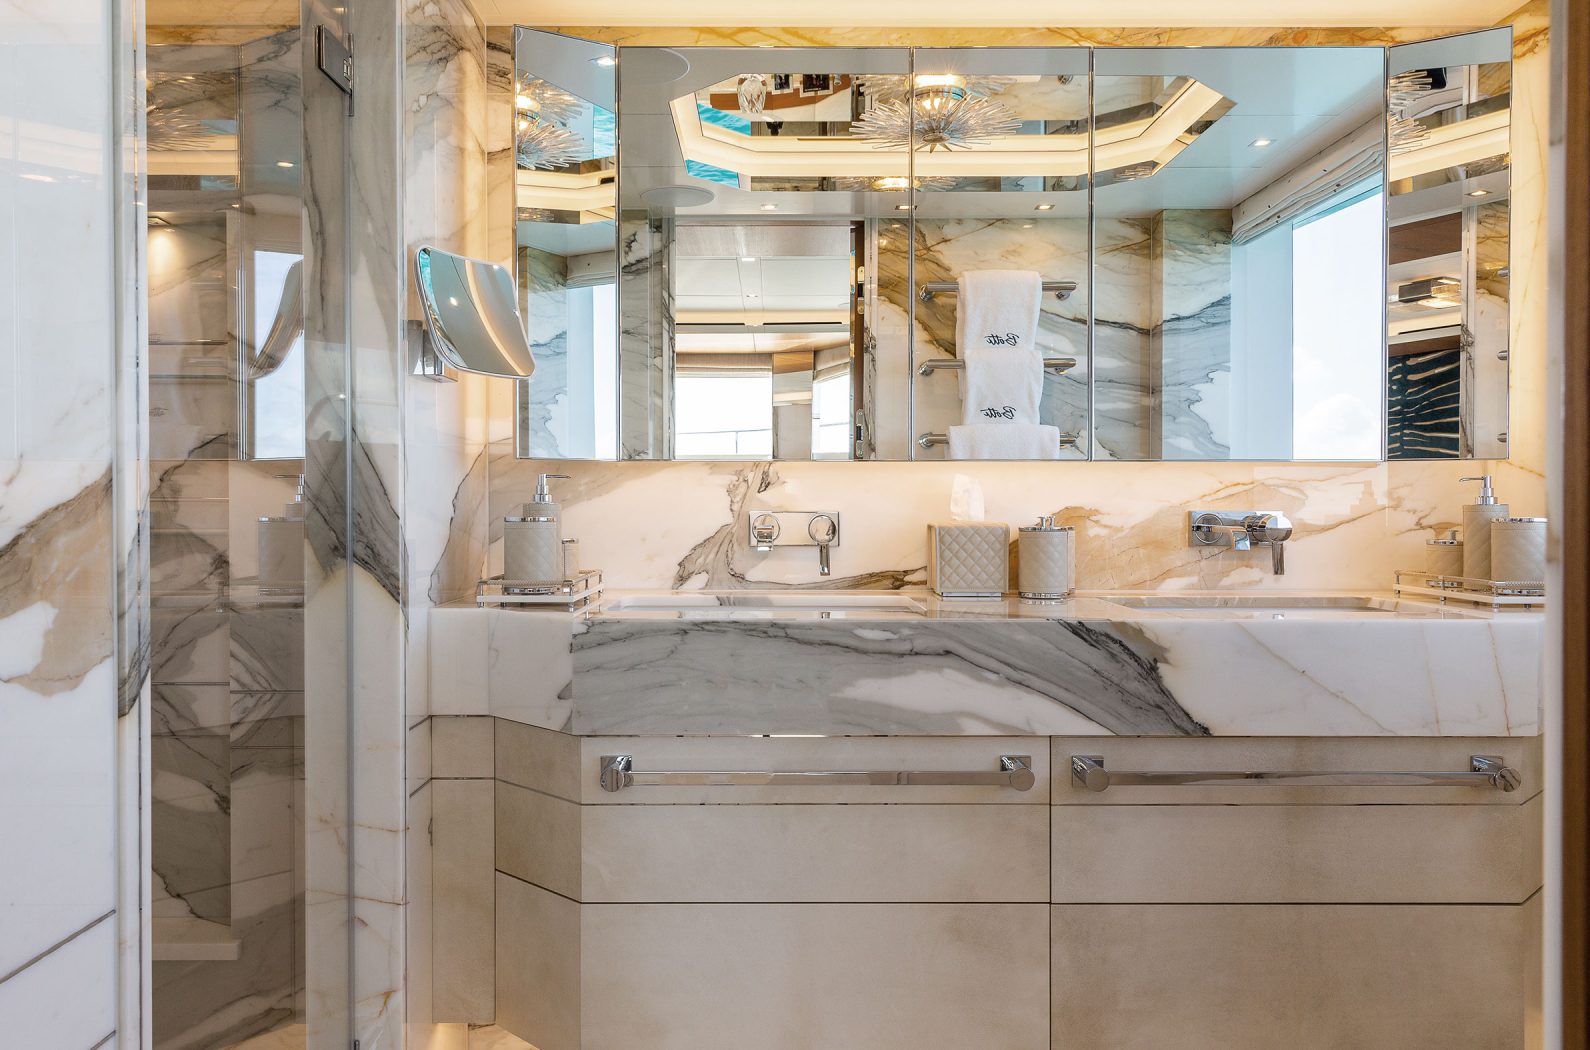 36m superyacht Botti principal bathroom designed by Studio Indigo